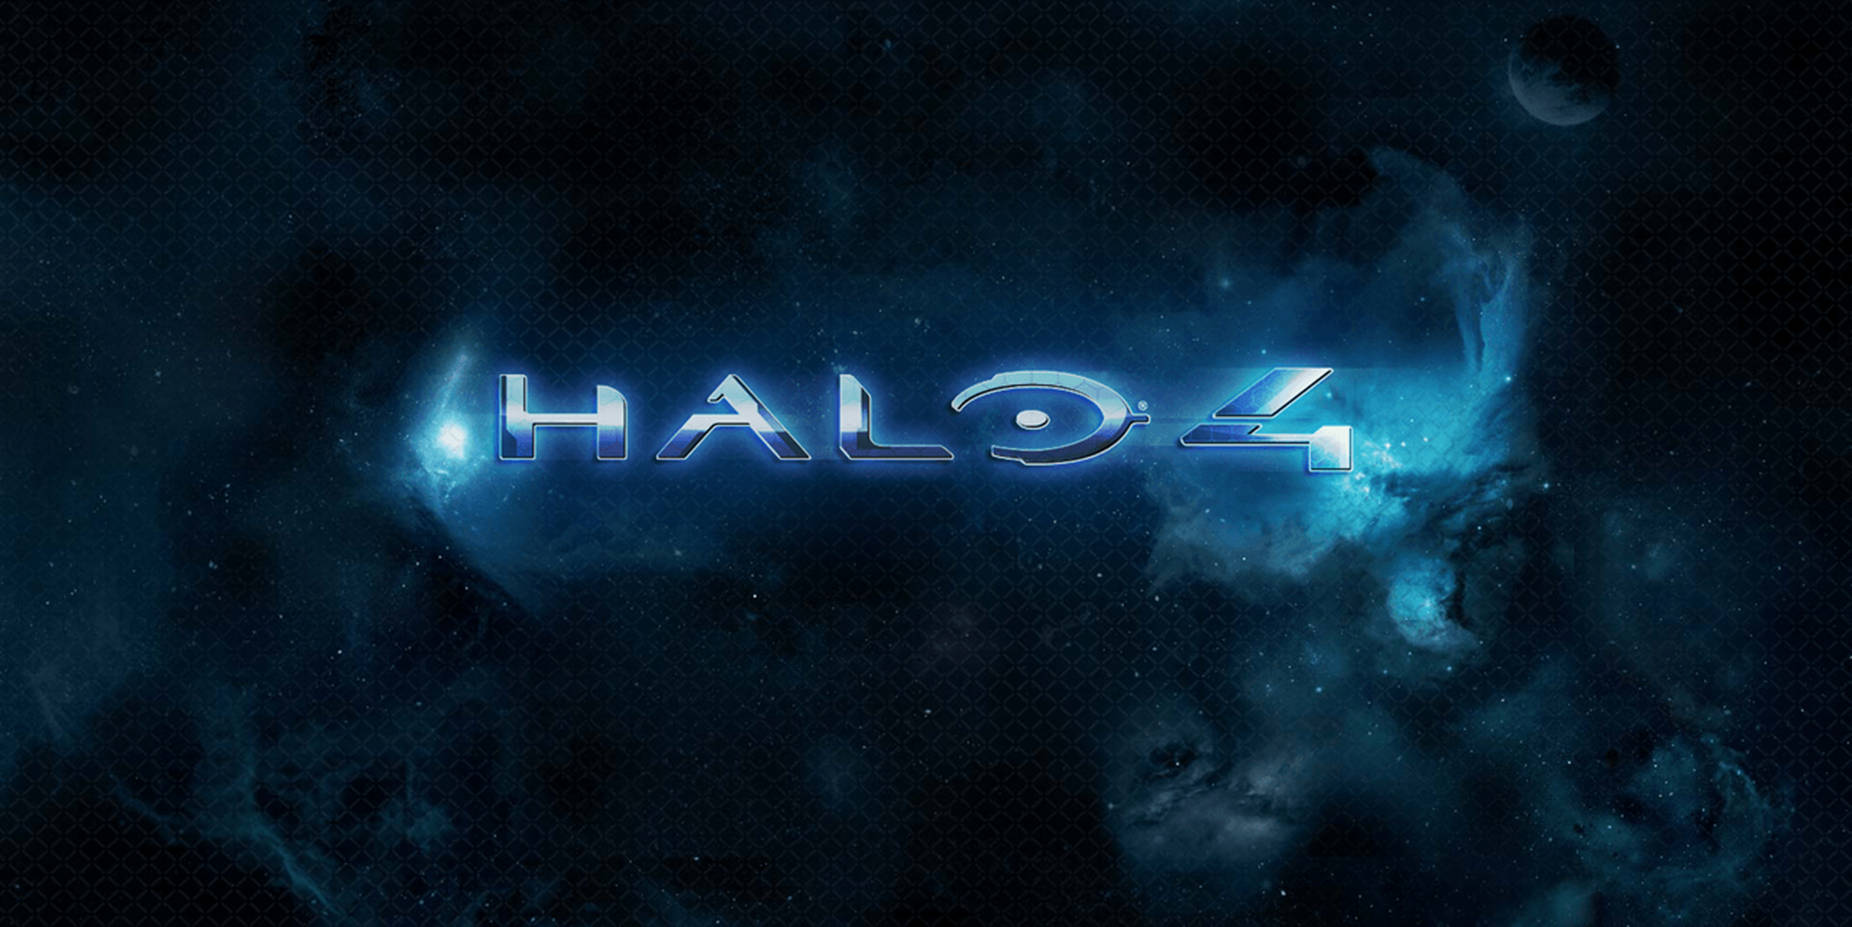 Halo 4 Logo Glowing Against a Blue Nebula Wallpaper